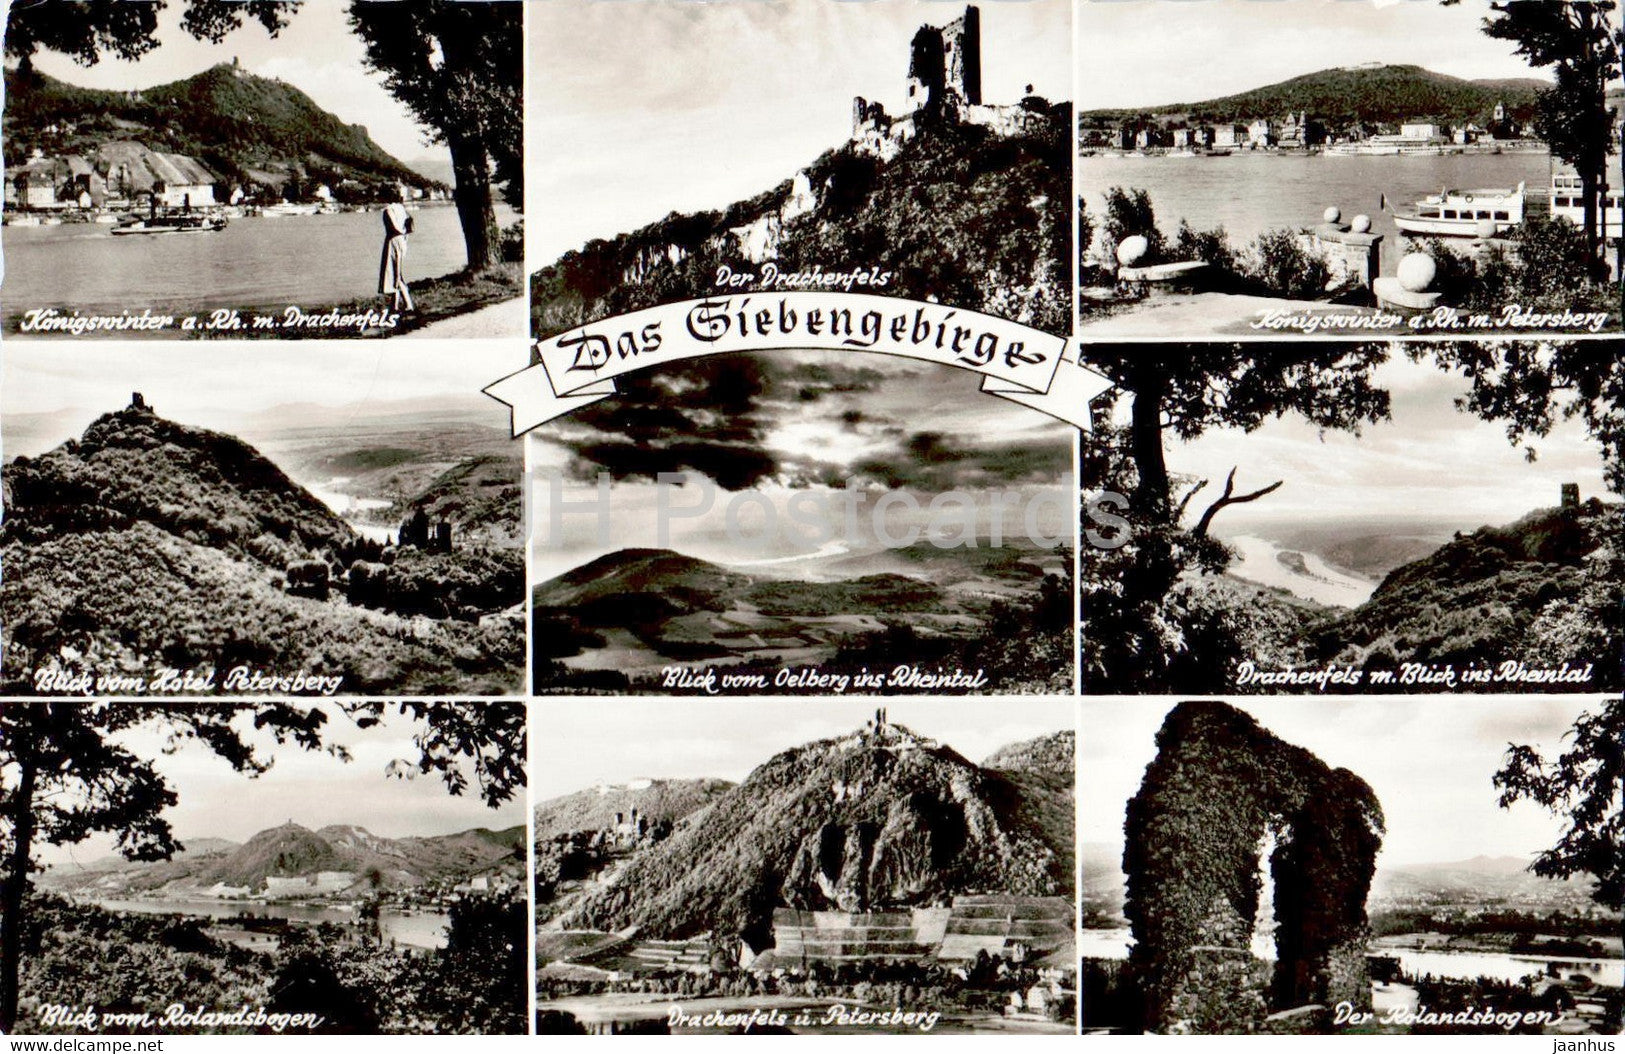 Das Siebengebirge - Konigswinter - Petersberg - Drachenfels - Rolandsbogen - old postcard - 1959 - Germany - used - JH Postcards